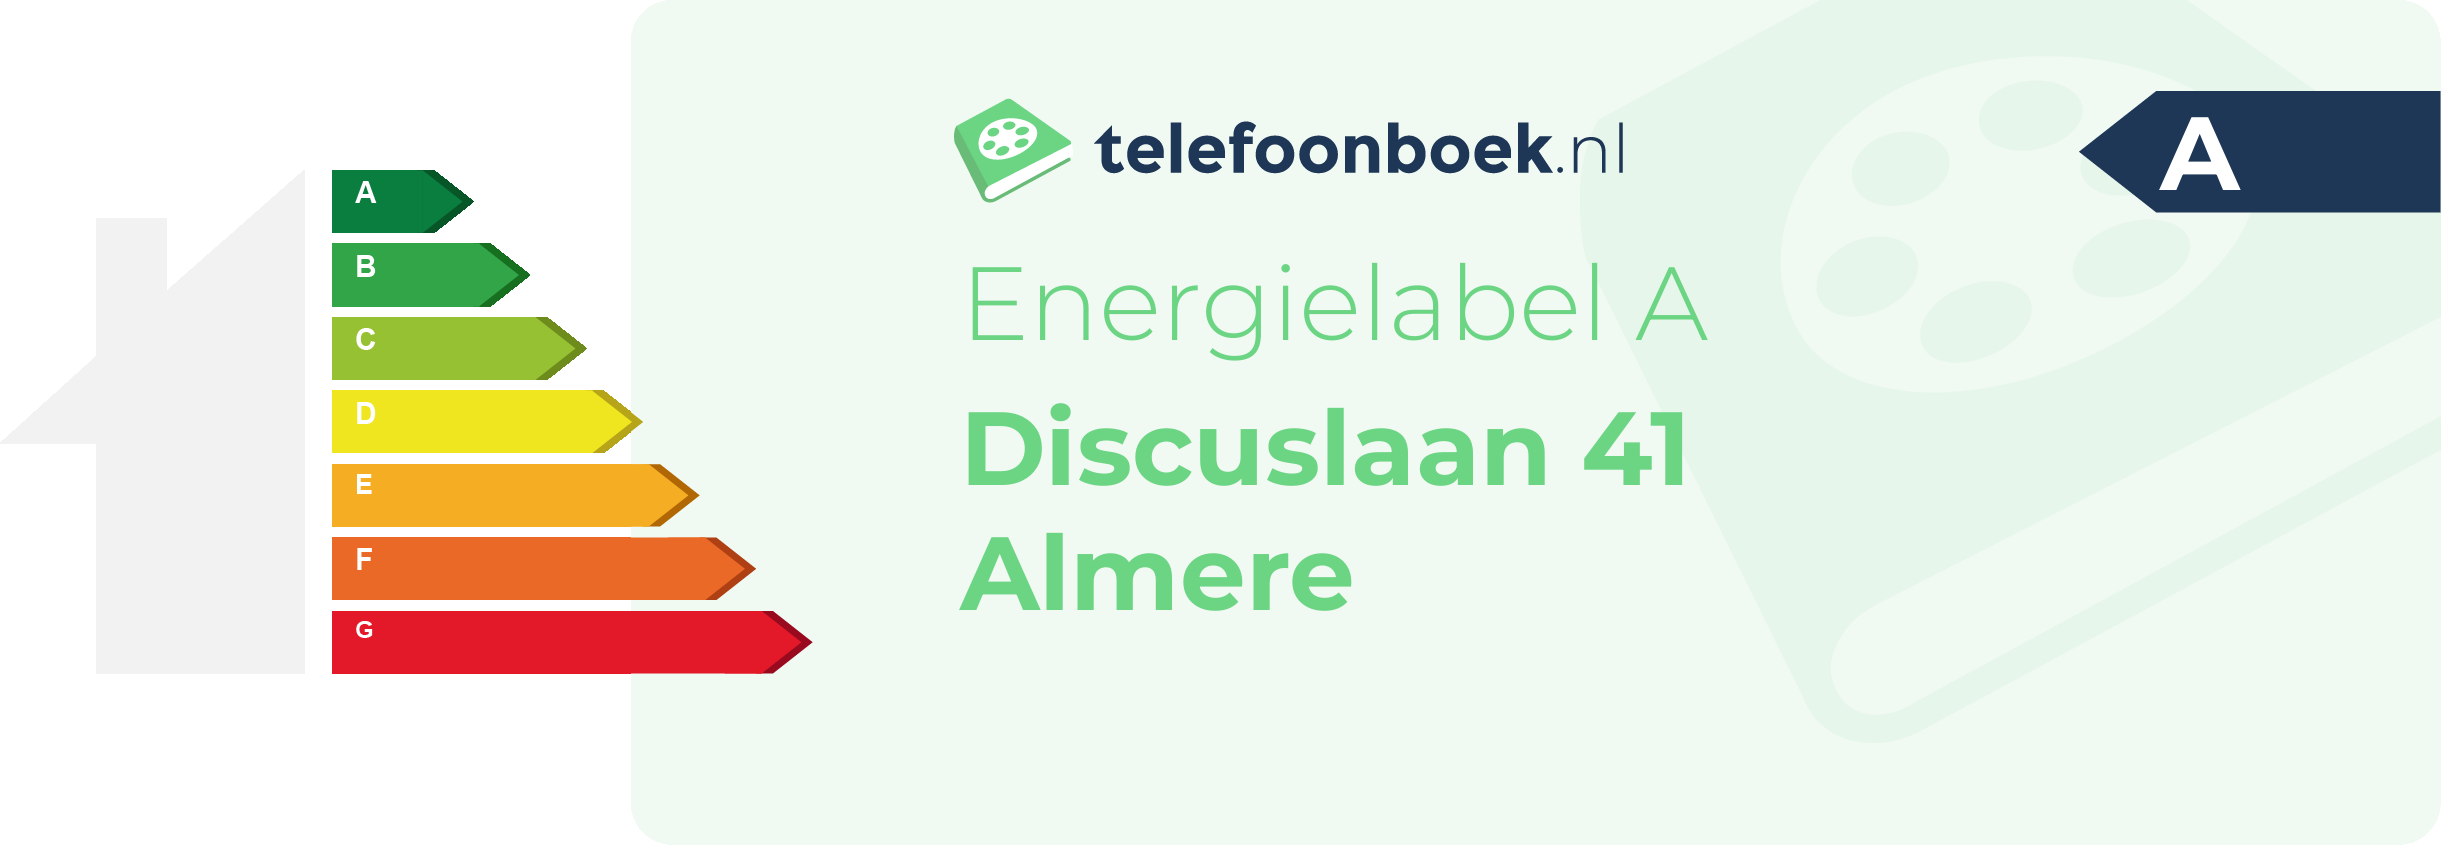 Energielabel Discuslaan 41 Almere